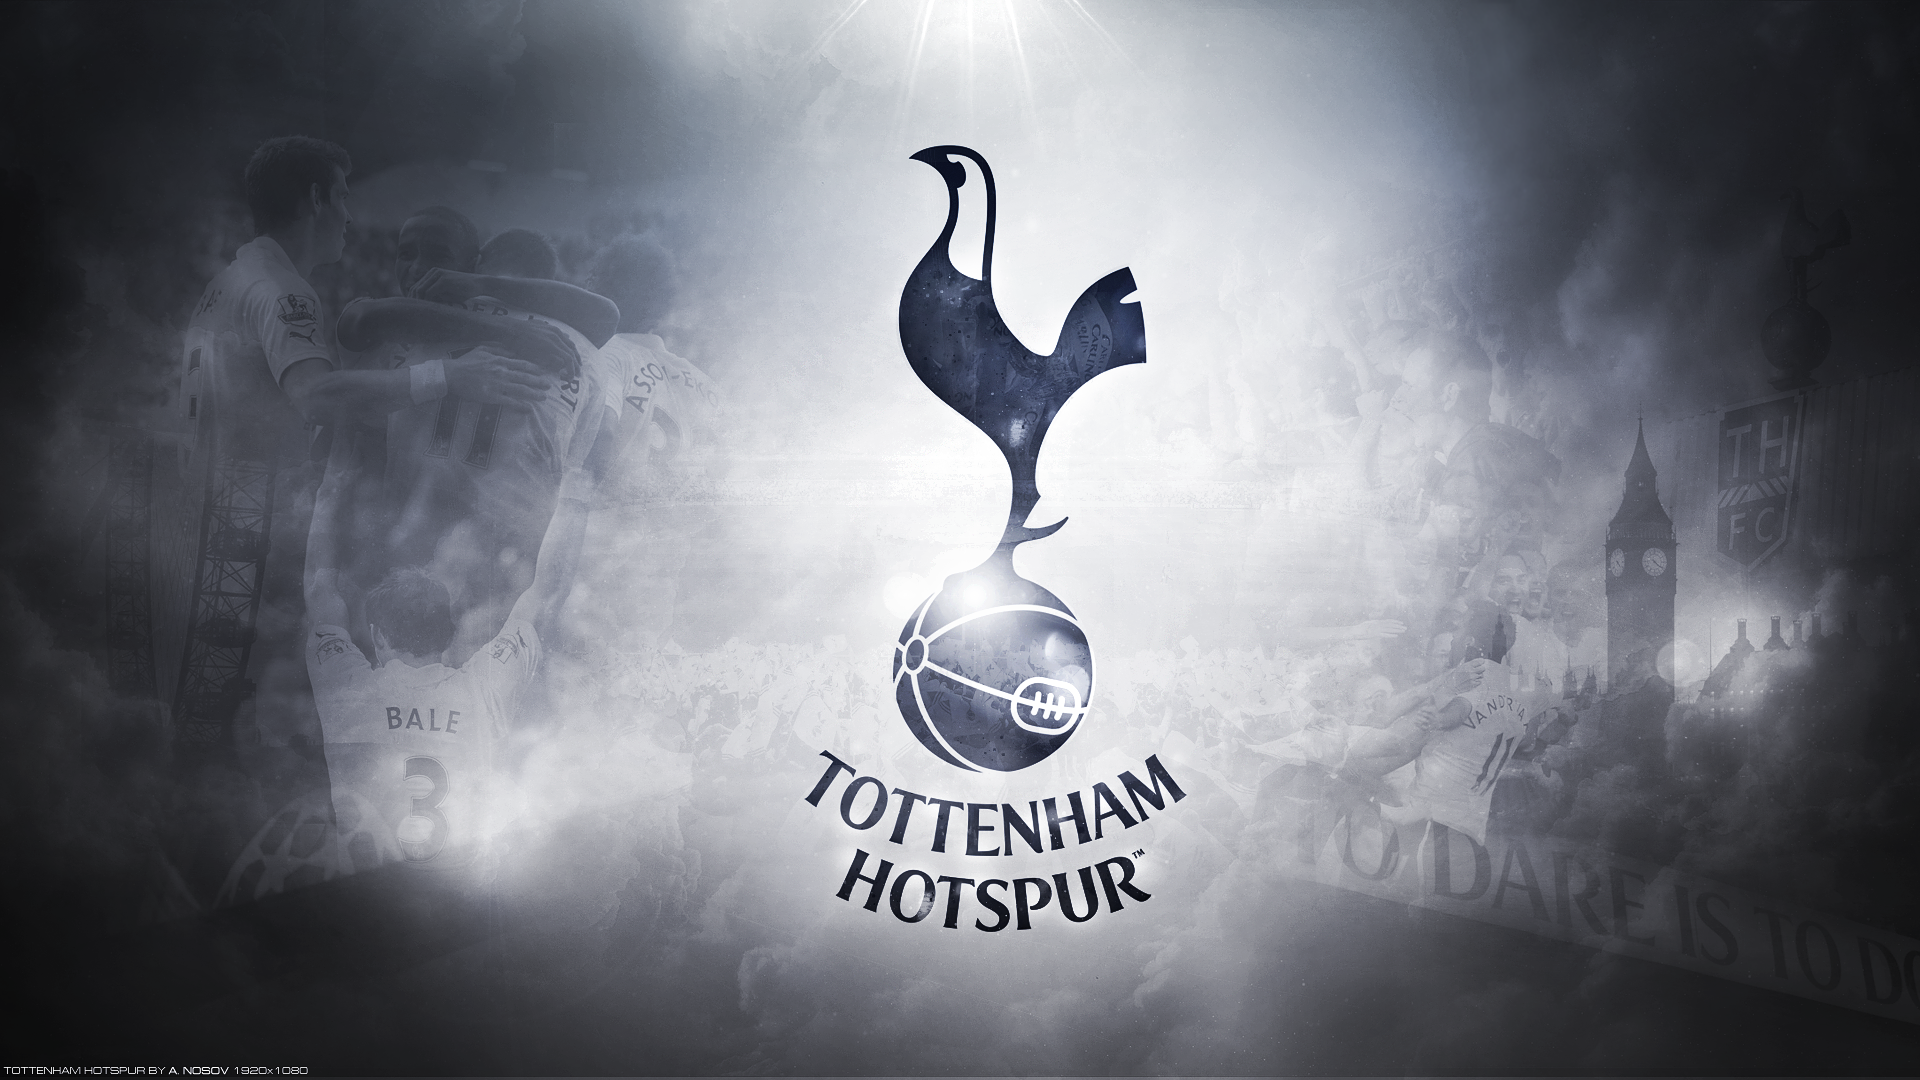 Tottenham Hotspur Tottenham COYS Spurs Logo 1920x1080